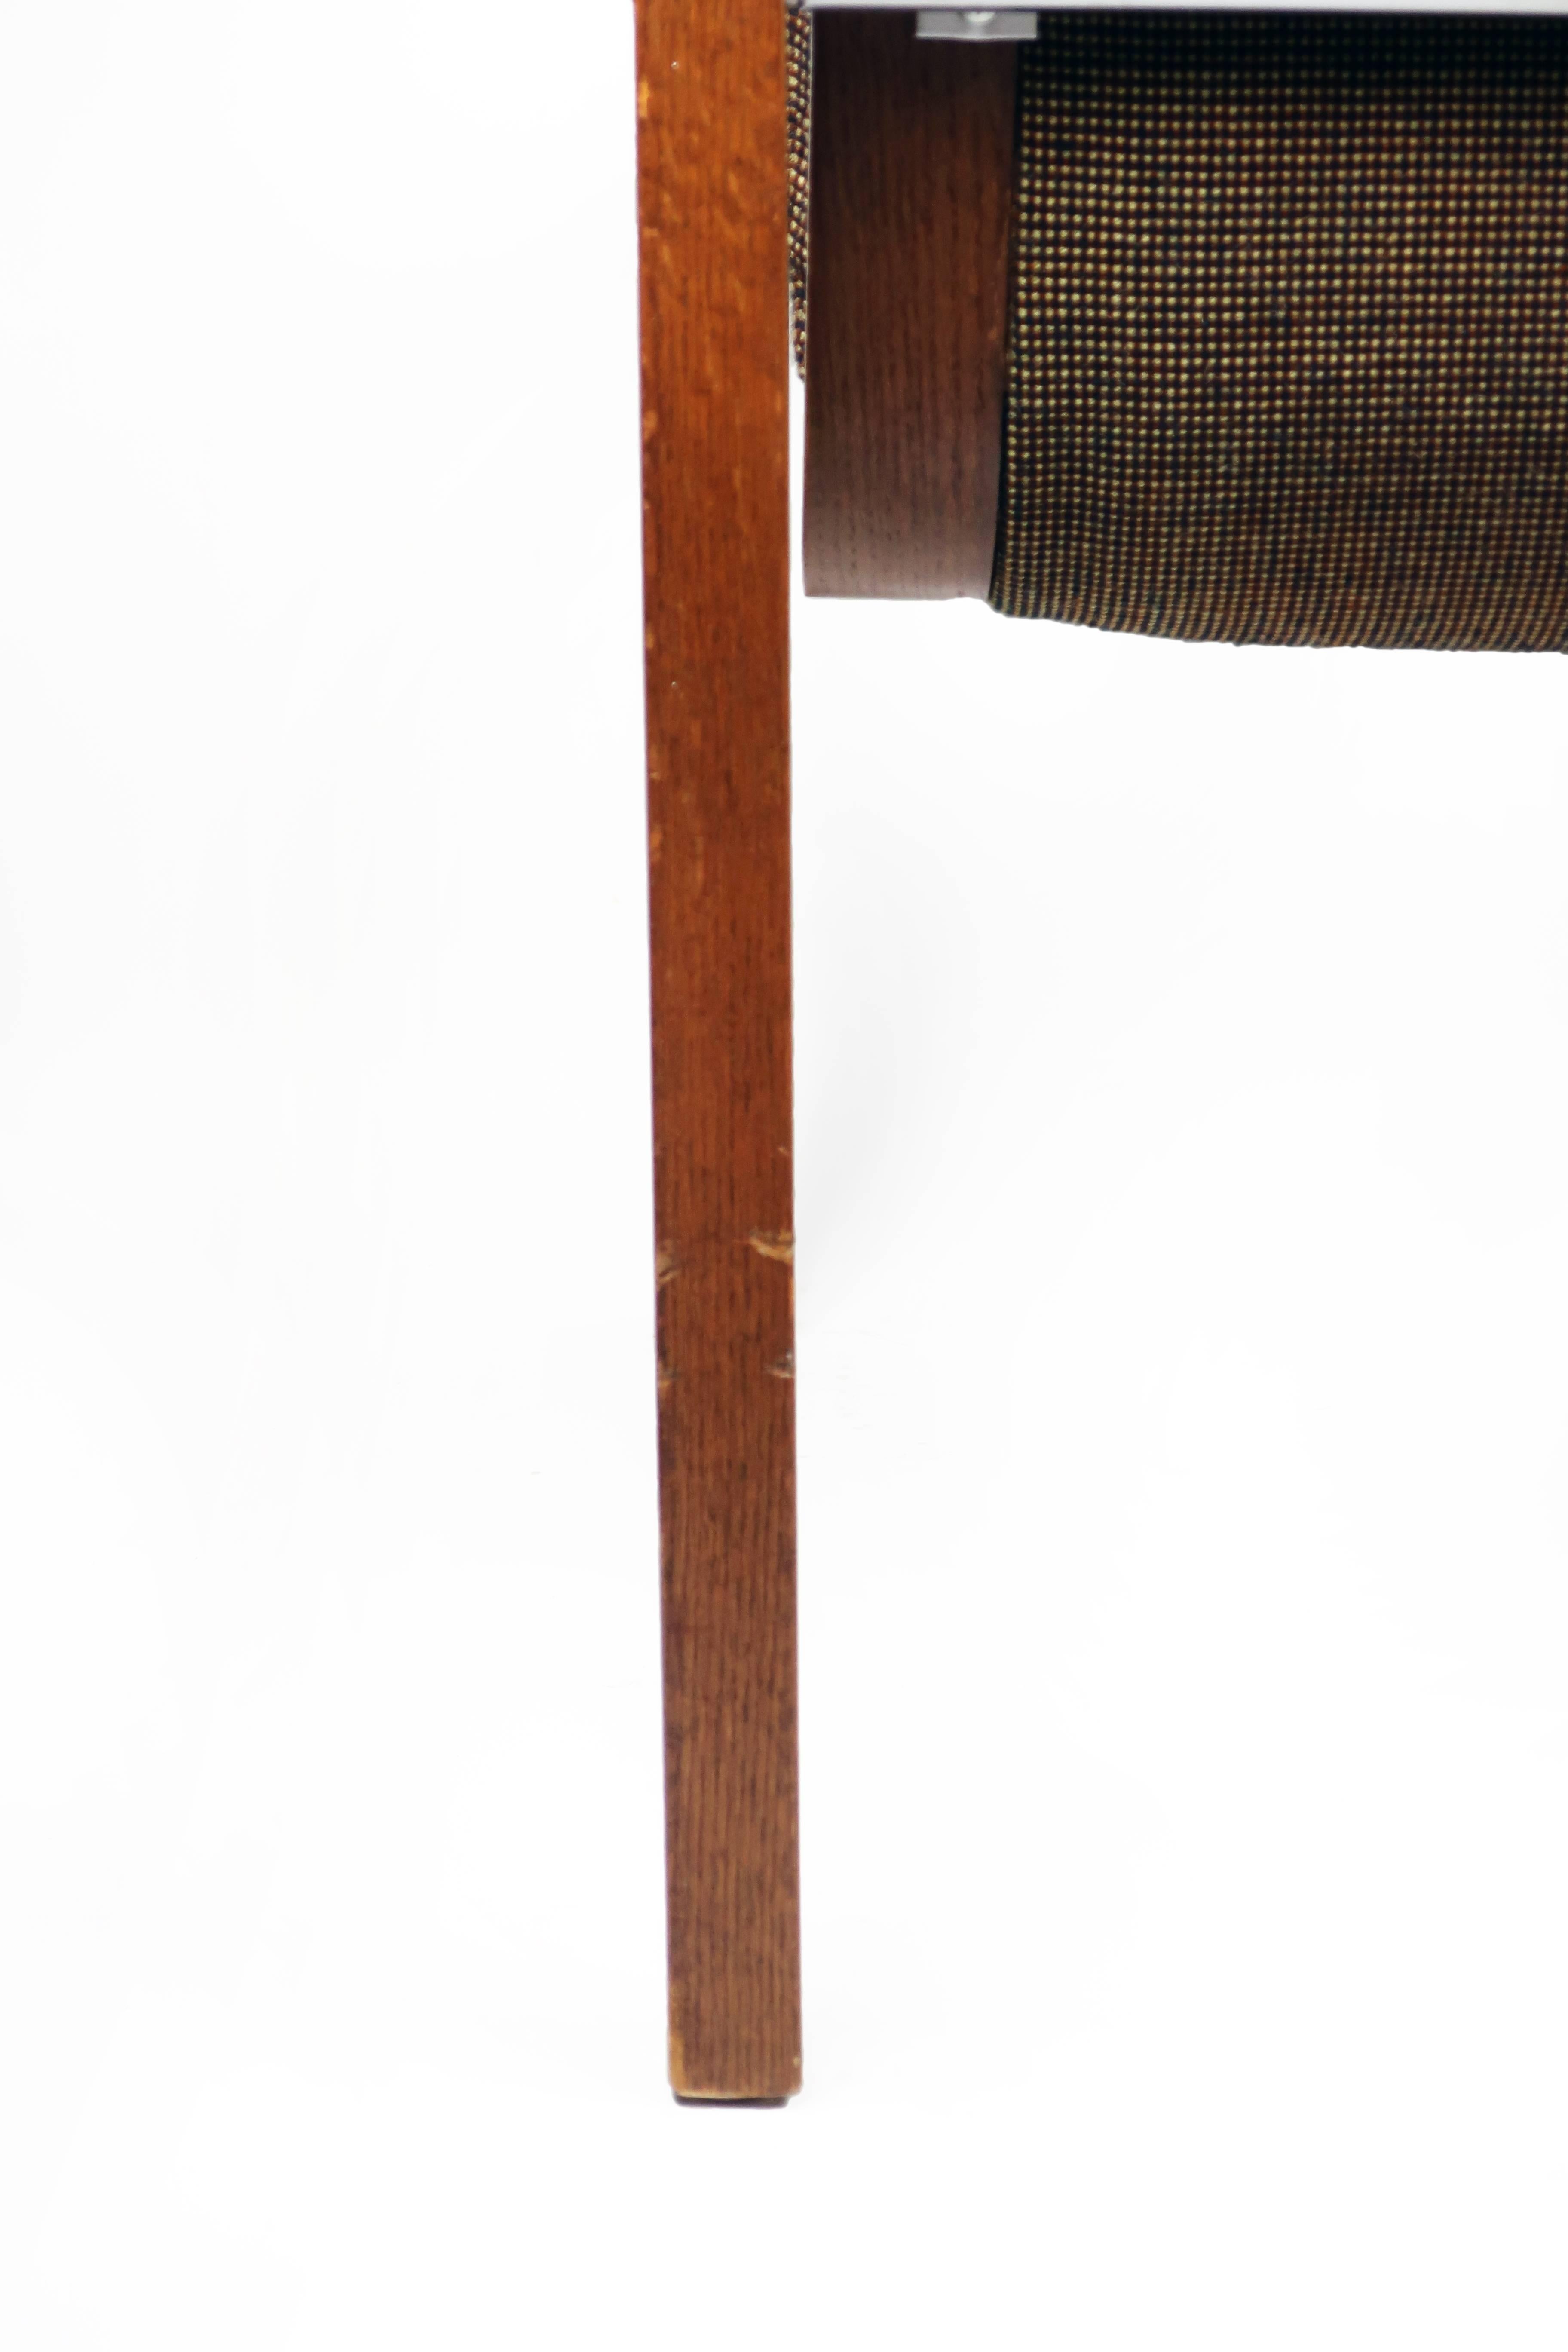 European Thonet Upholstered Bentwood Armchair